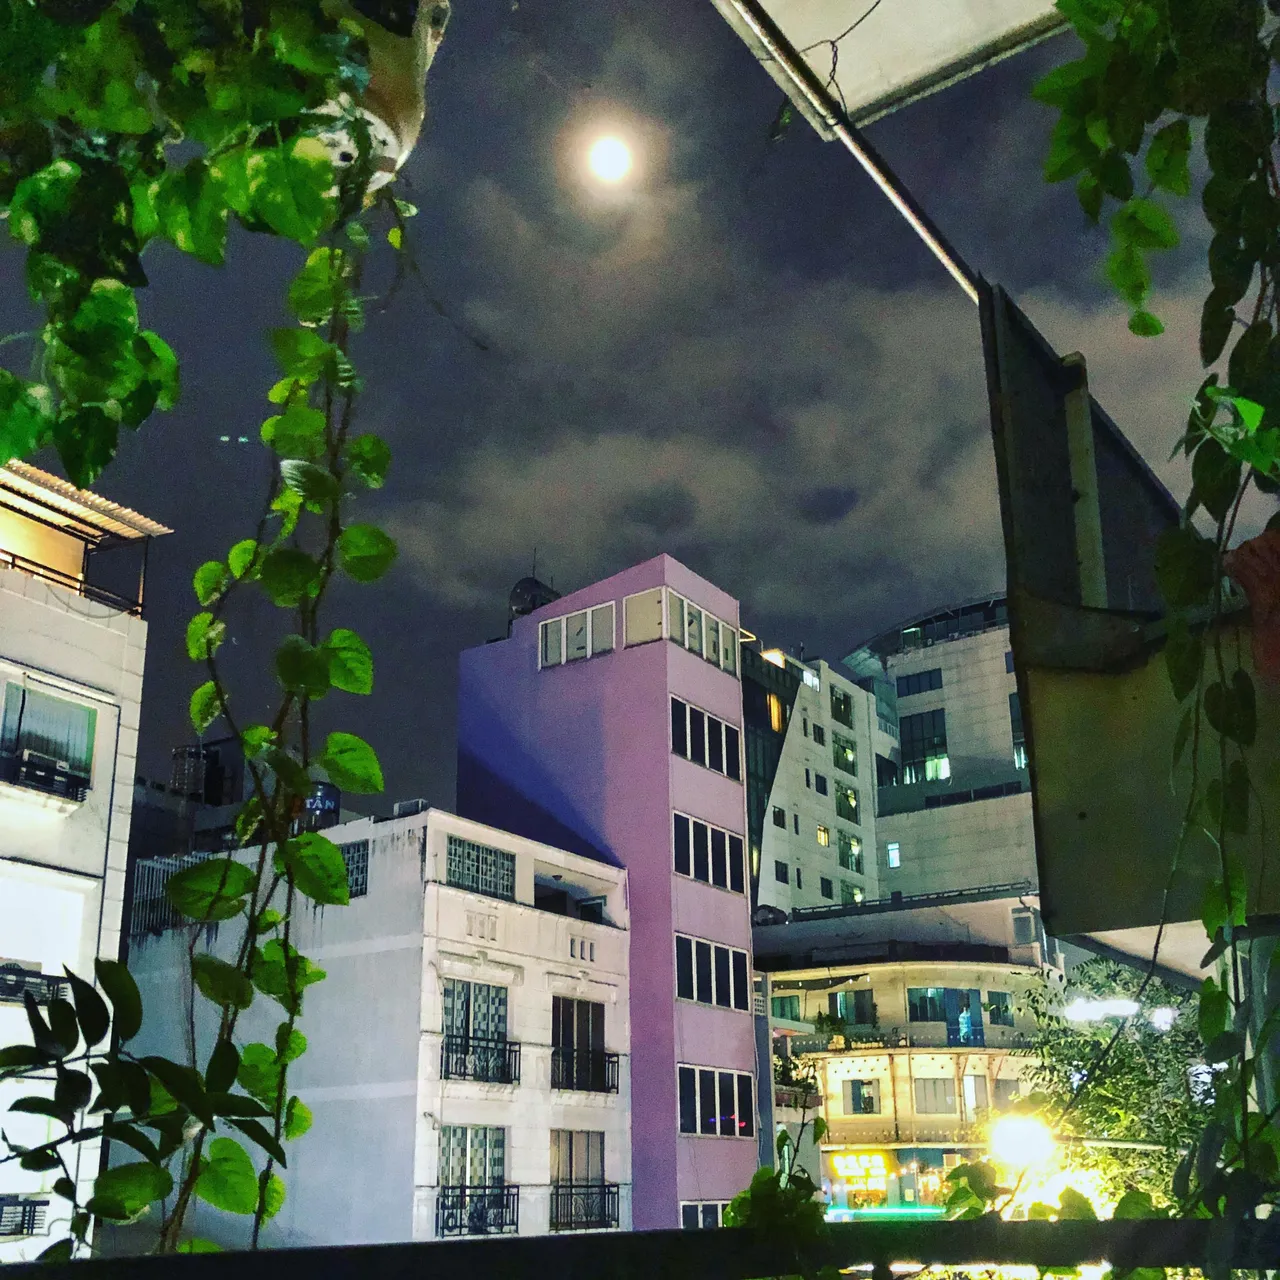 Full Moon Vibes in Saigon